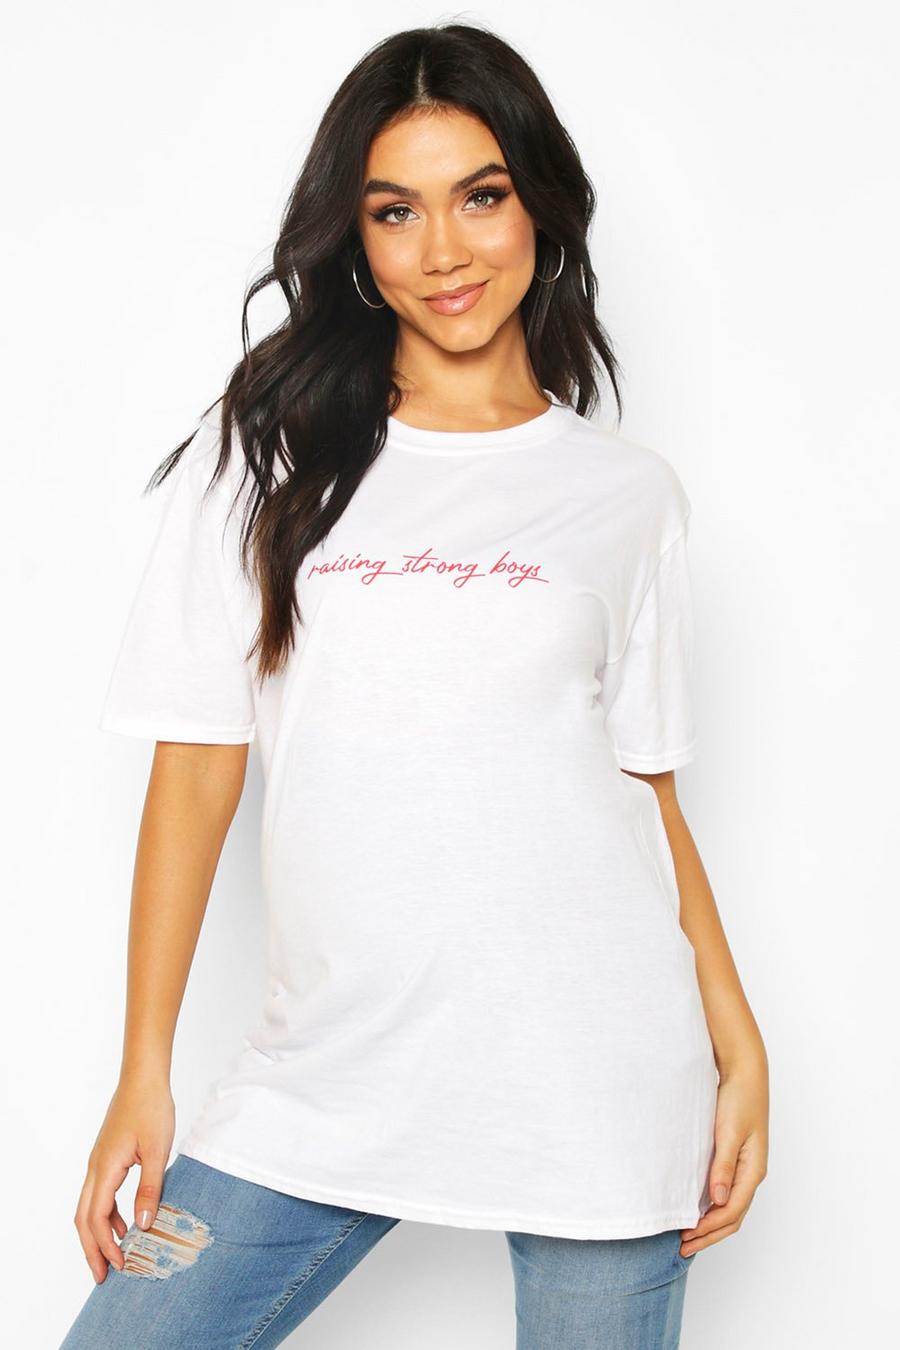 T-shirt premaman con scritta “Raising Strong Boys” image number 1